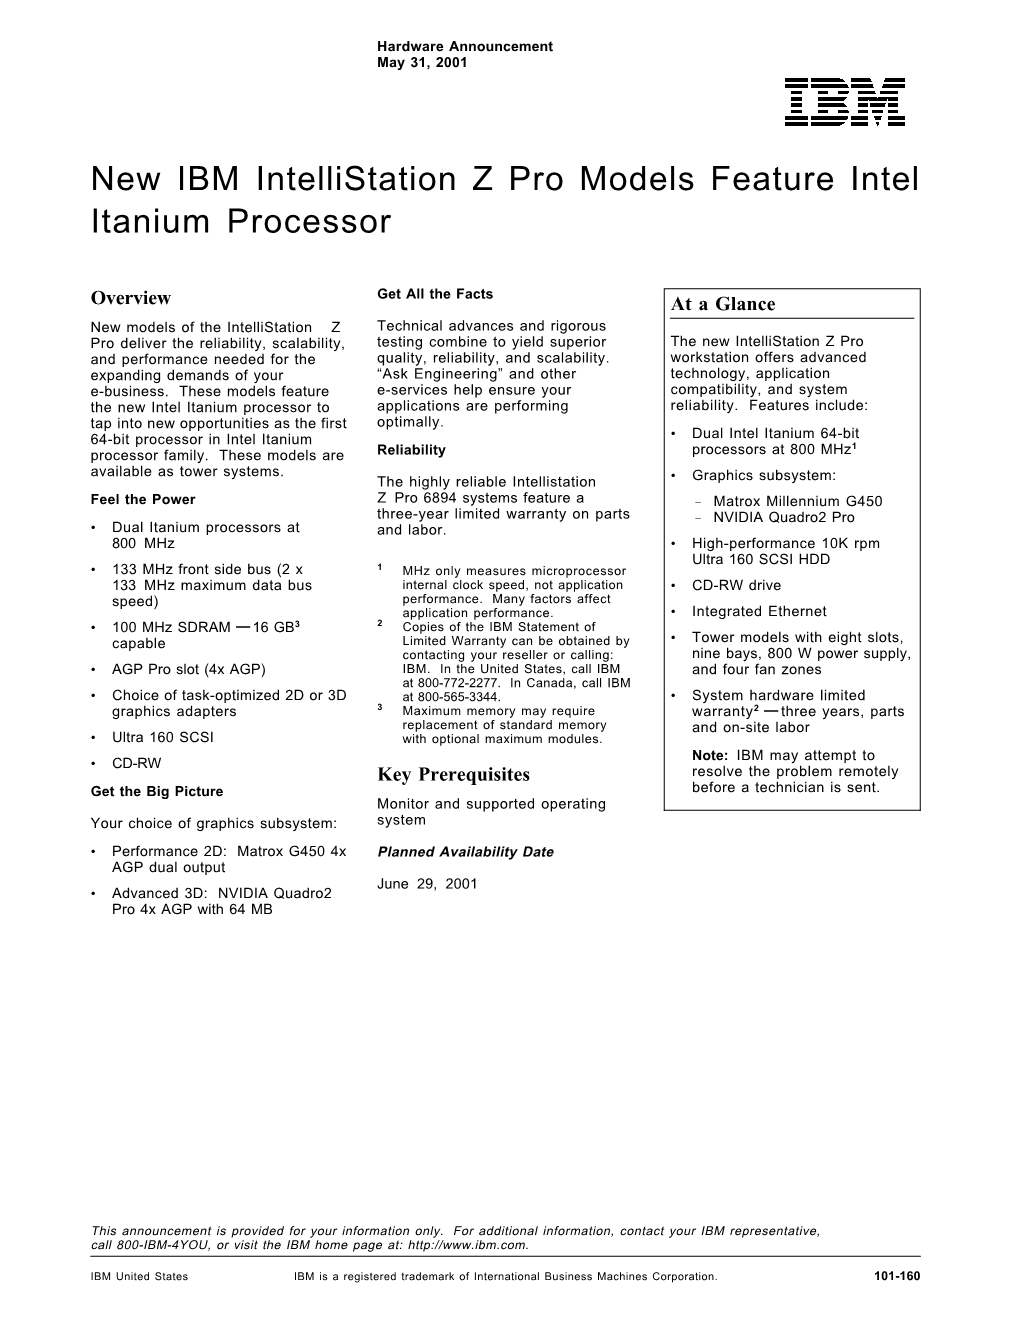 New IBM Intellistation Z Pro Models Feature Intel Itanium Processor